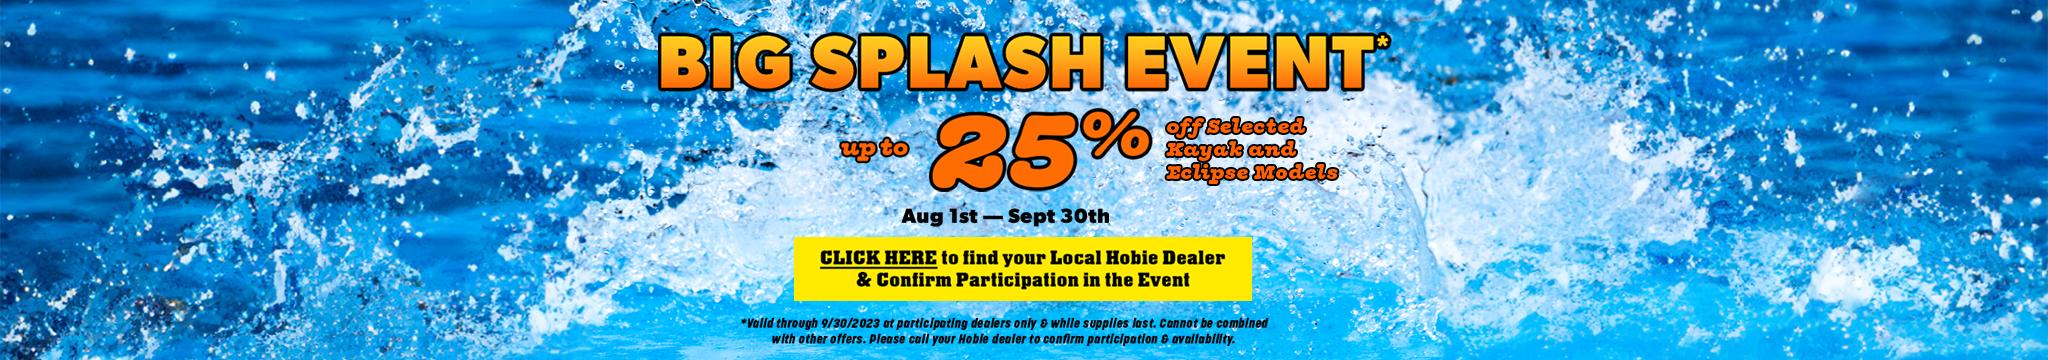 Big Splash Event Banner